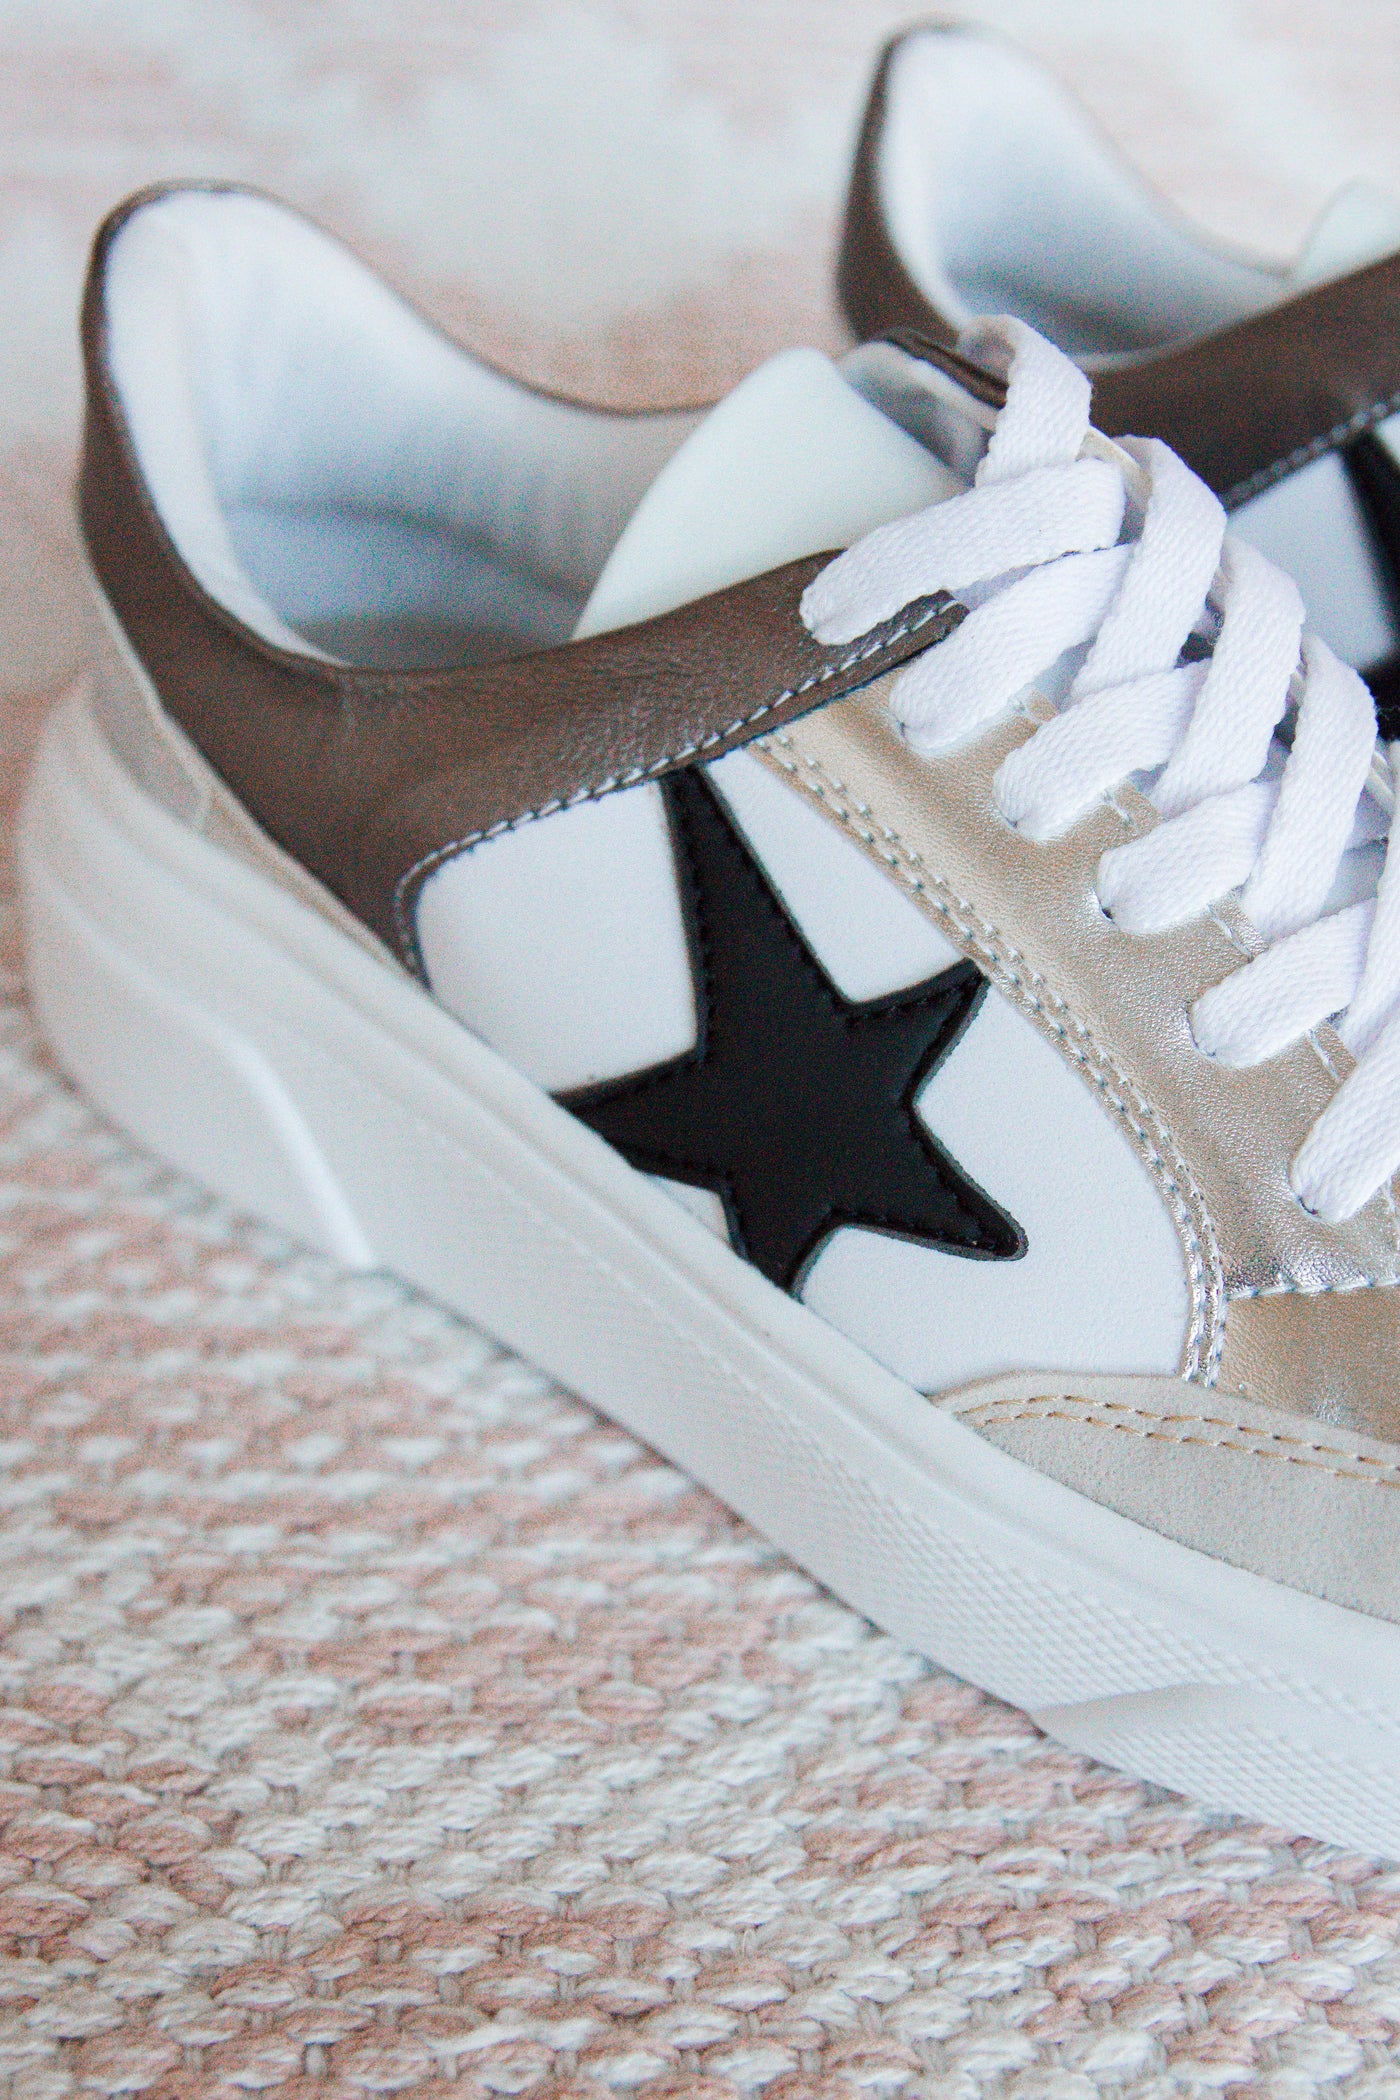 Trendy Star Sneakers- Women's Platform Star Sneakers- $45